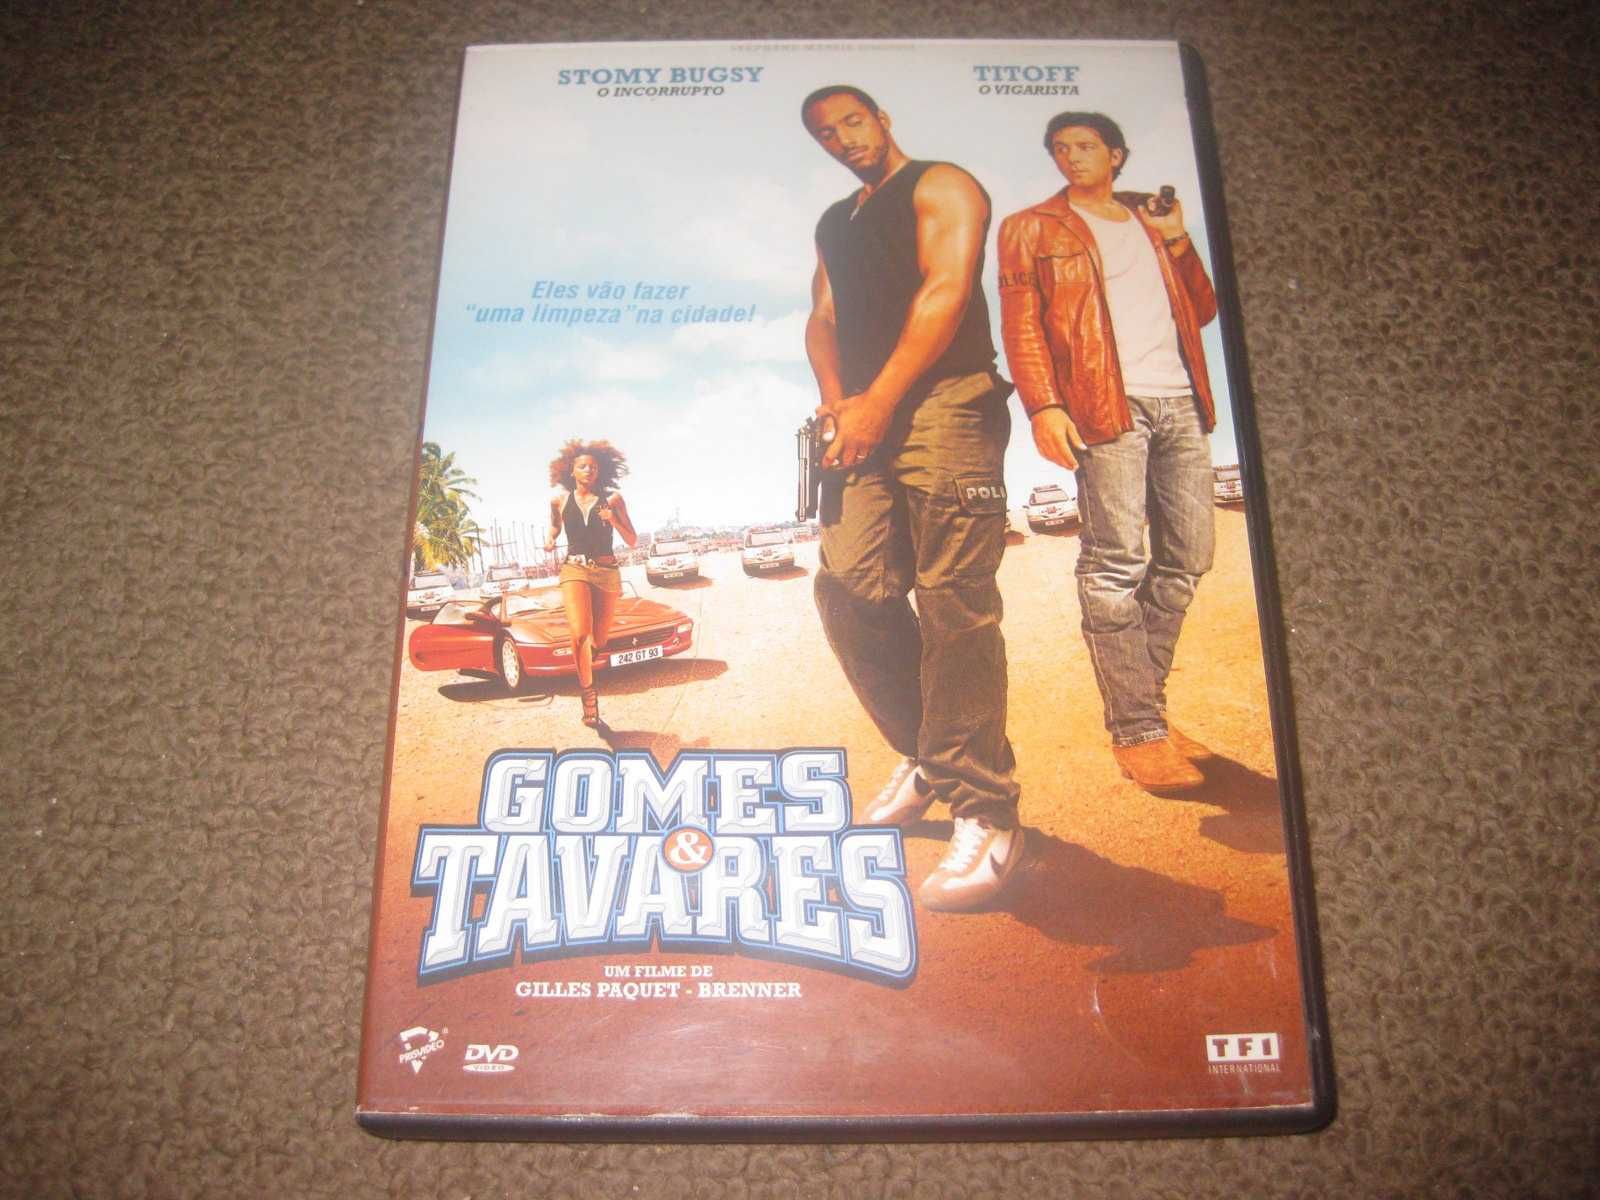 DVD "Gomes & Tavares" de Gilles Paquet-Brenner